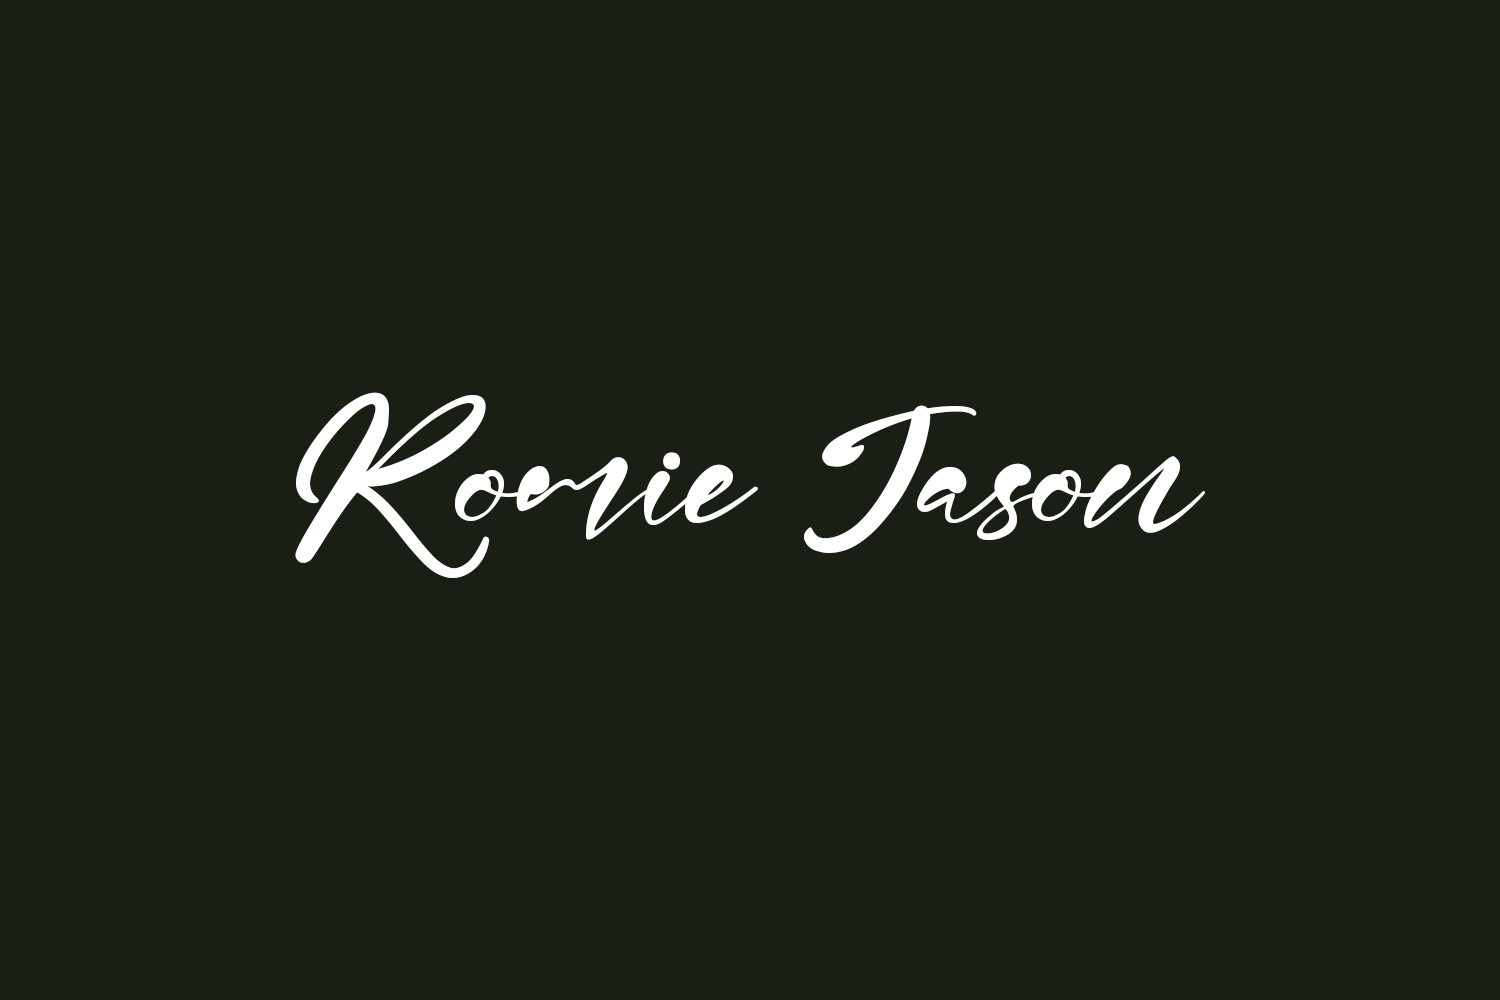 Romie Jason Free Font